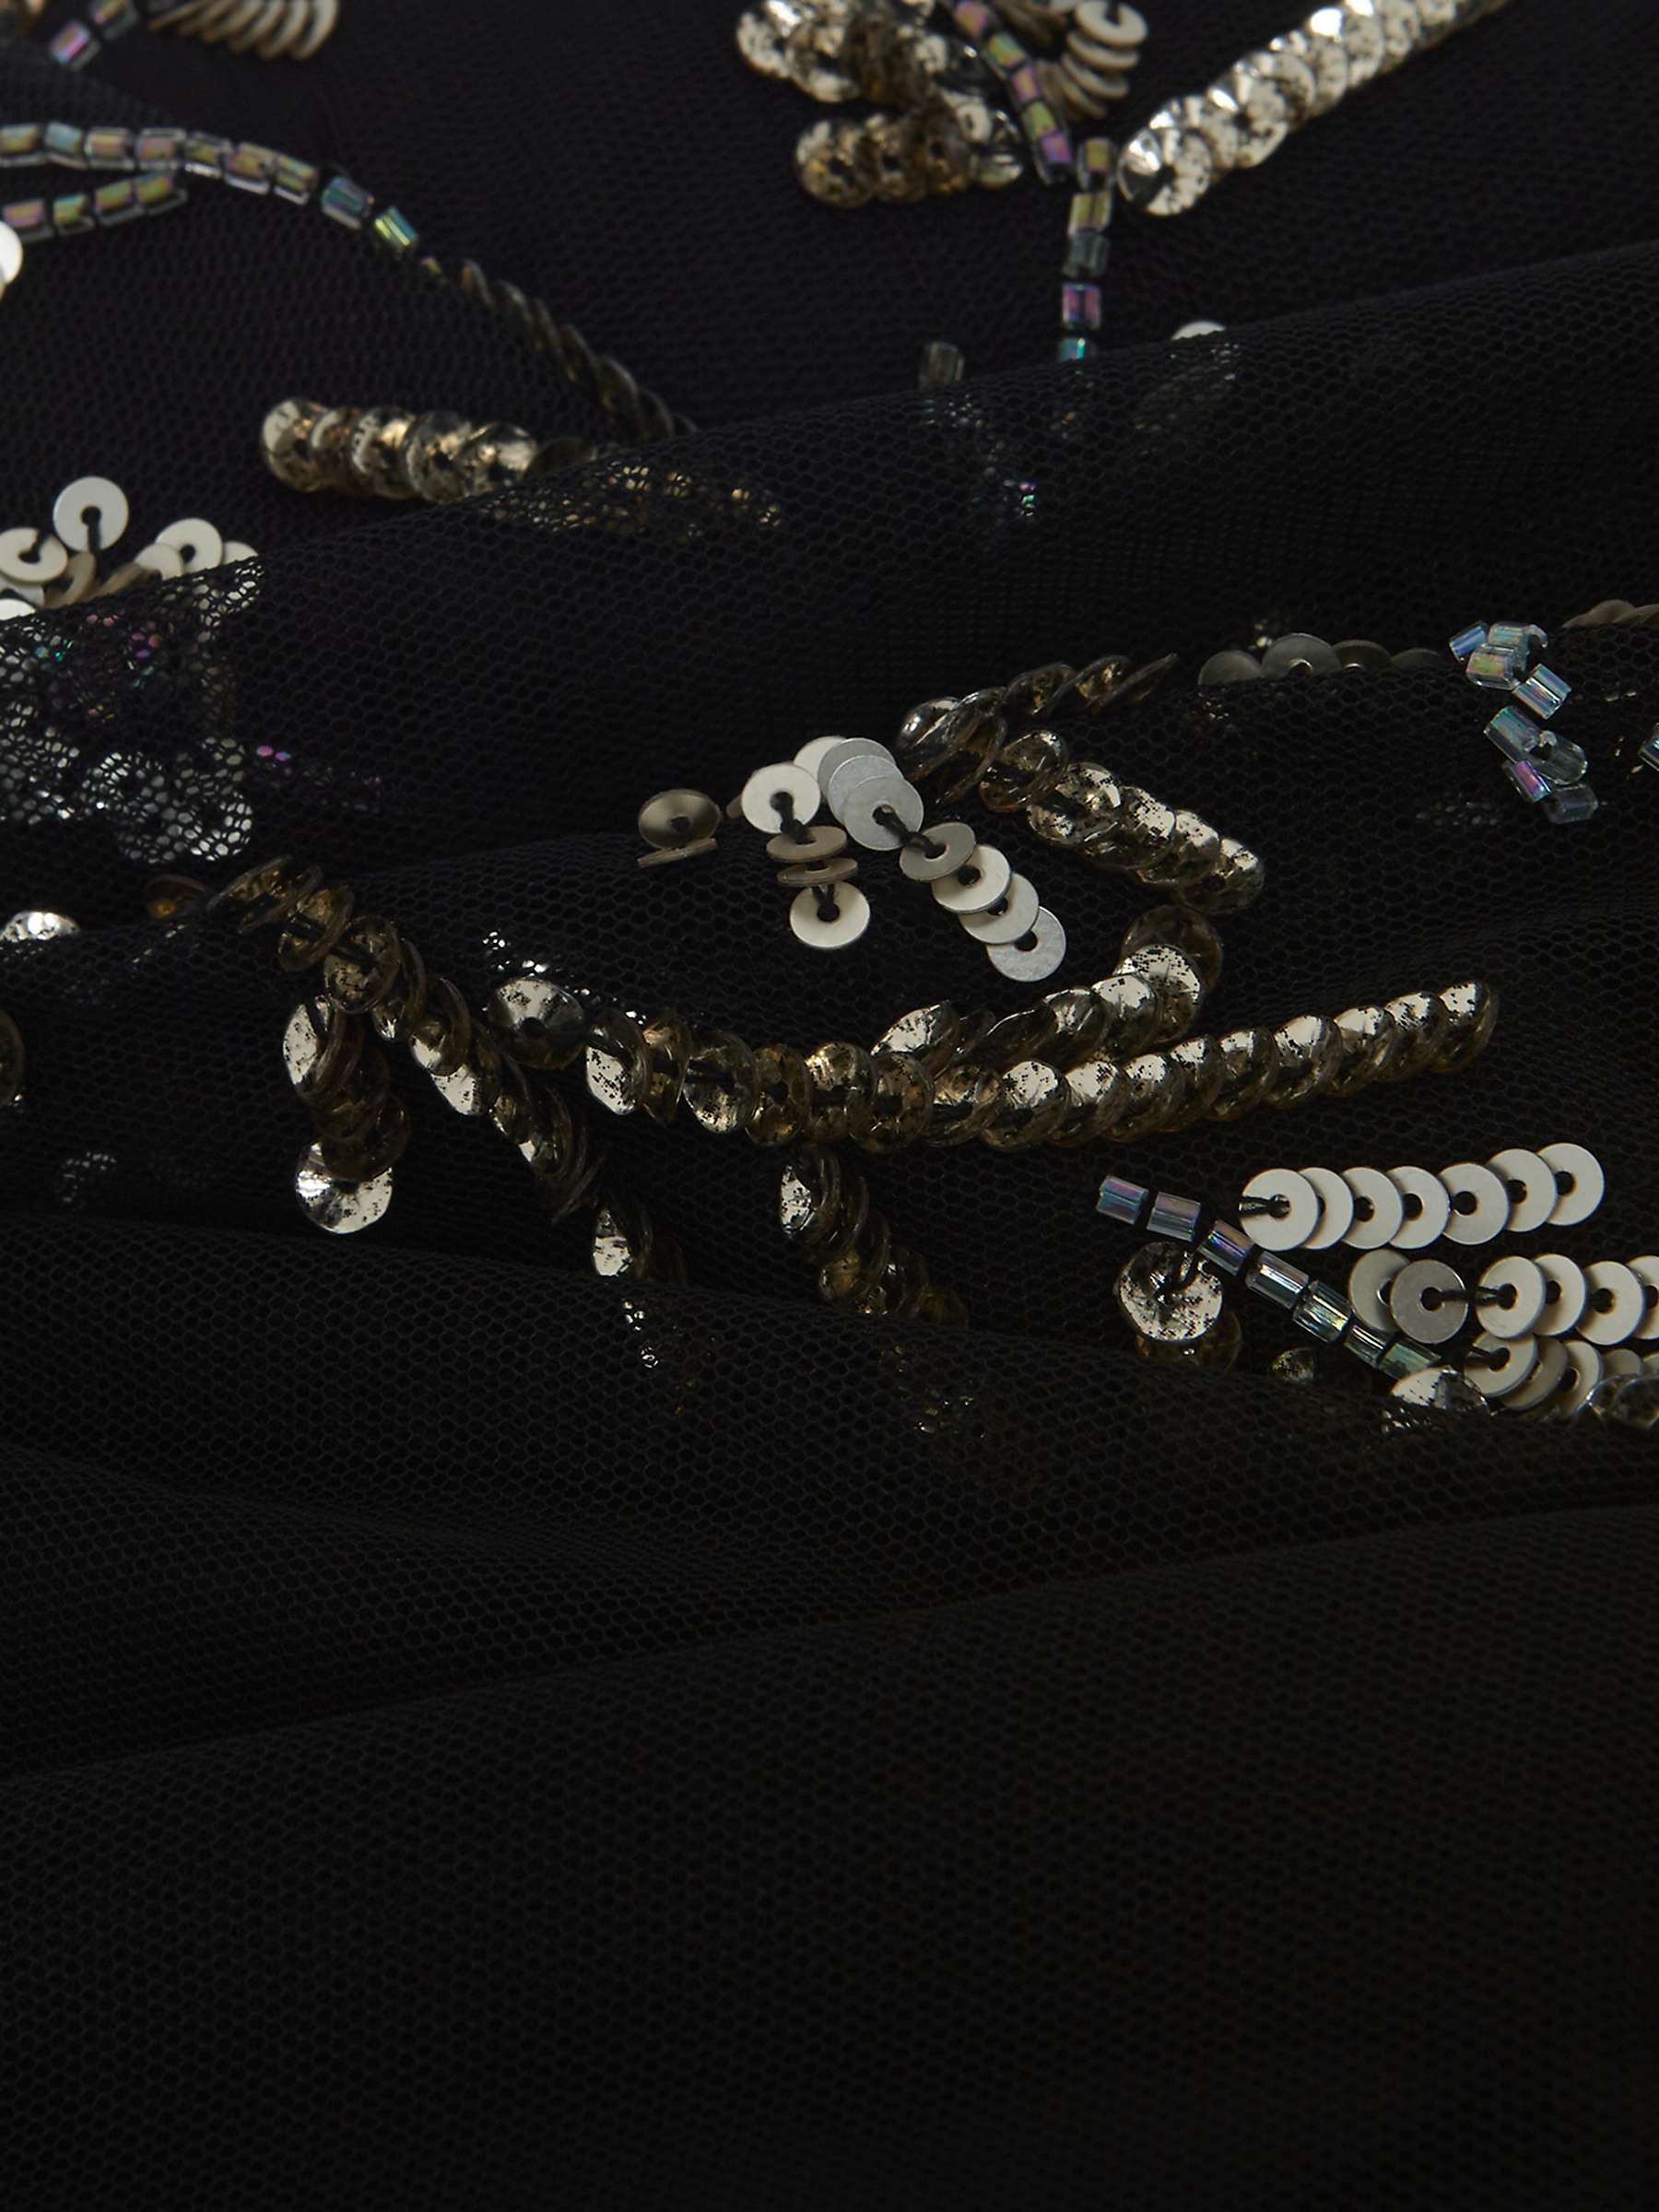 Buy Phase Eight Marissa Embellished Midi Dress, Black/Gold Online at johnlewis.com